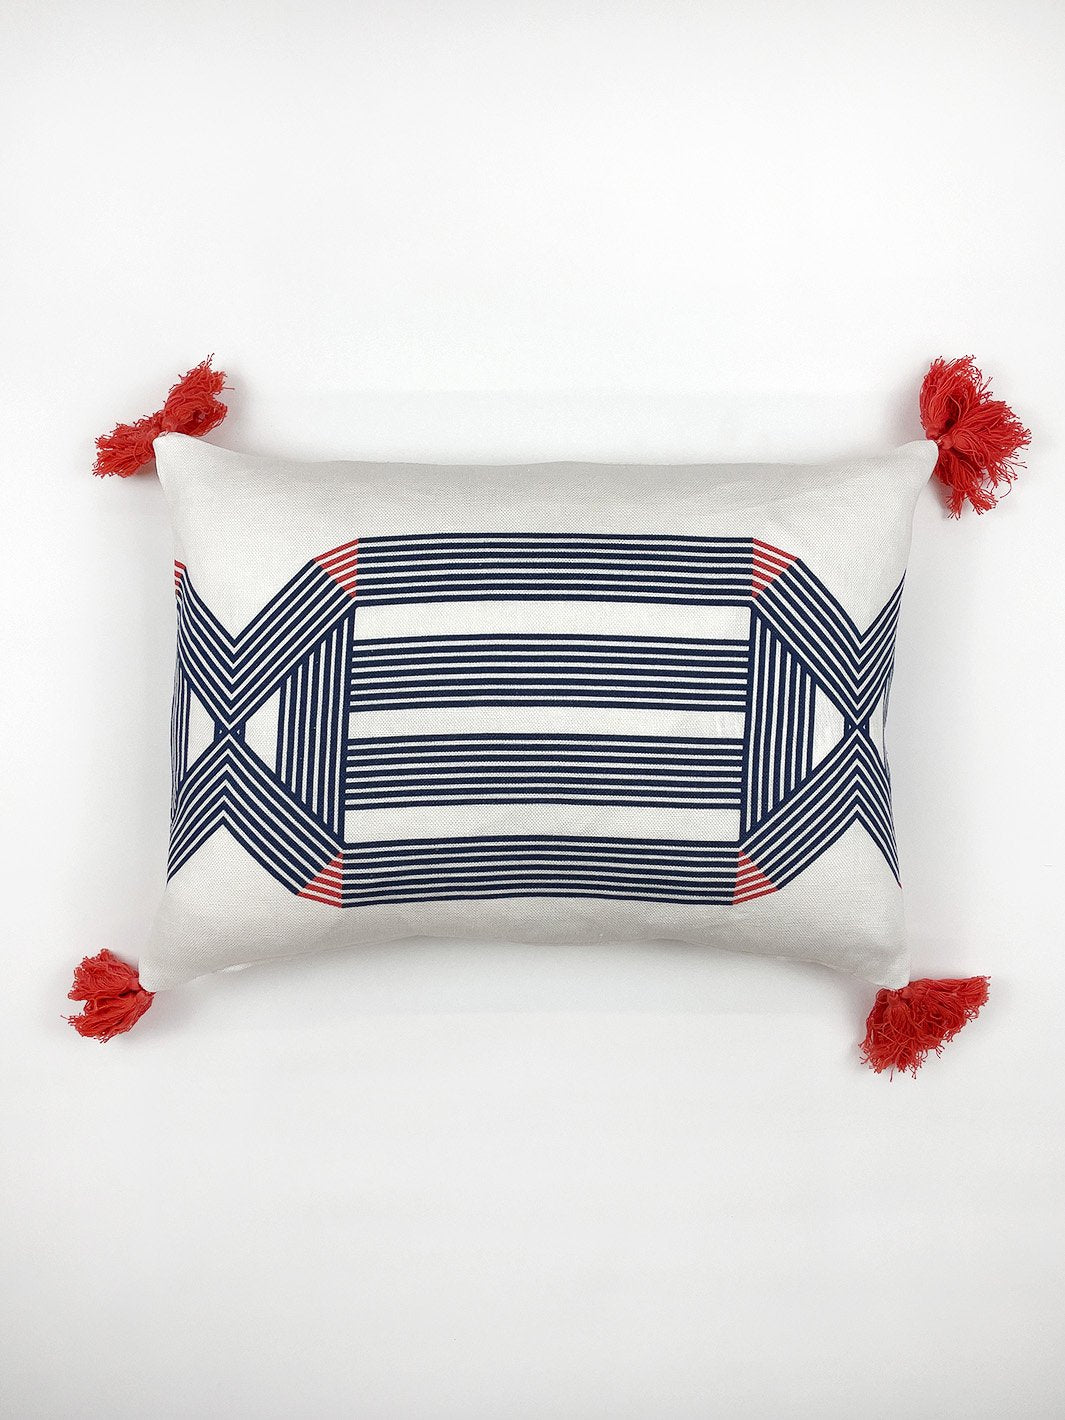 'Roman Holiday Key' Lumbar Pillow by Barbie™ - Navy